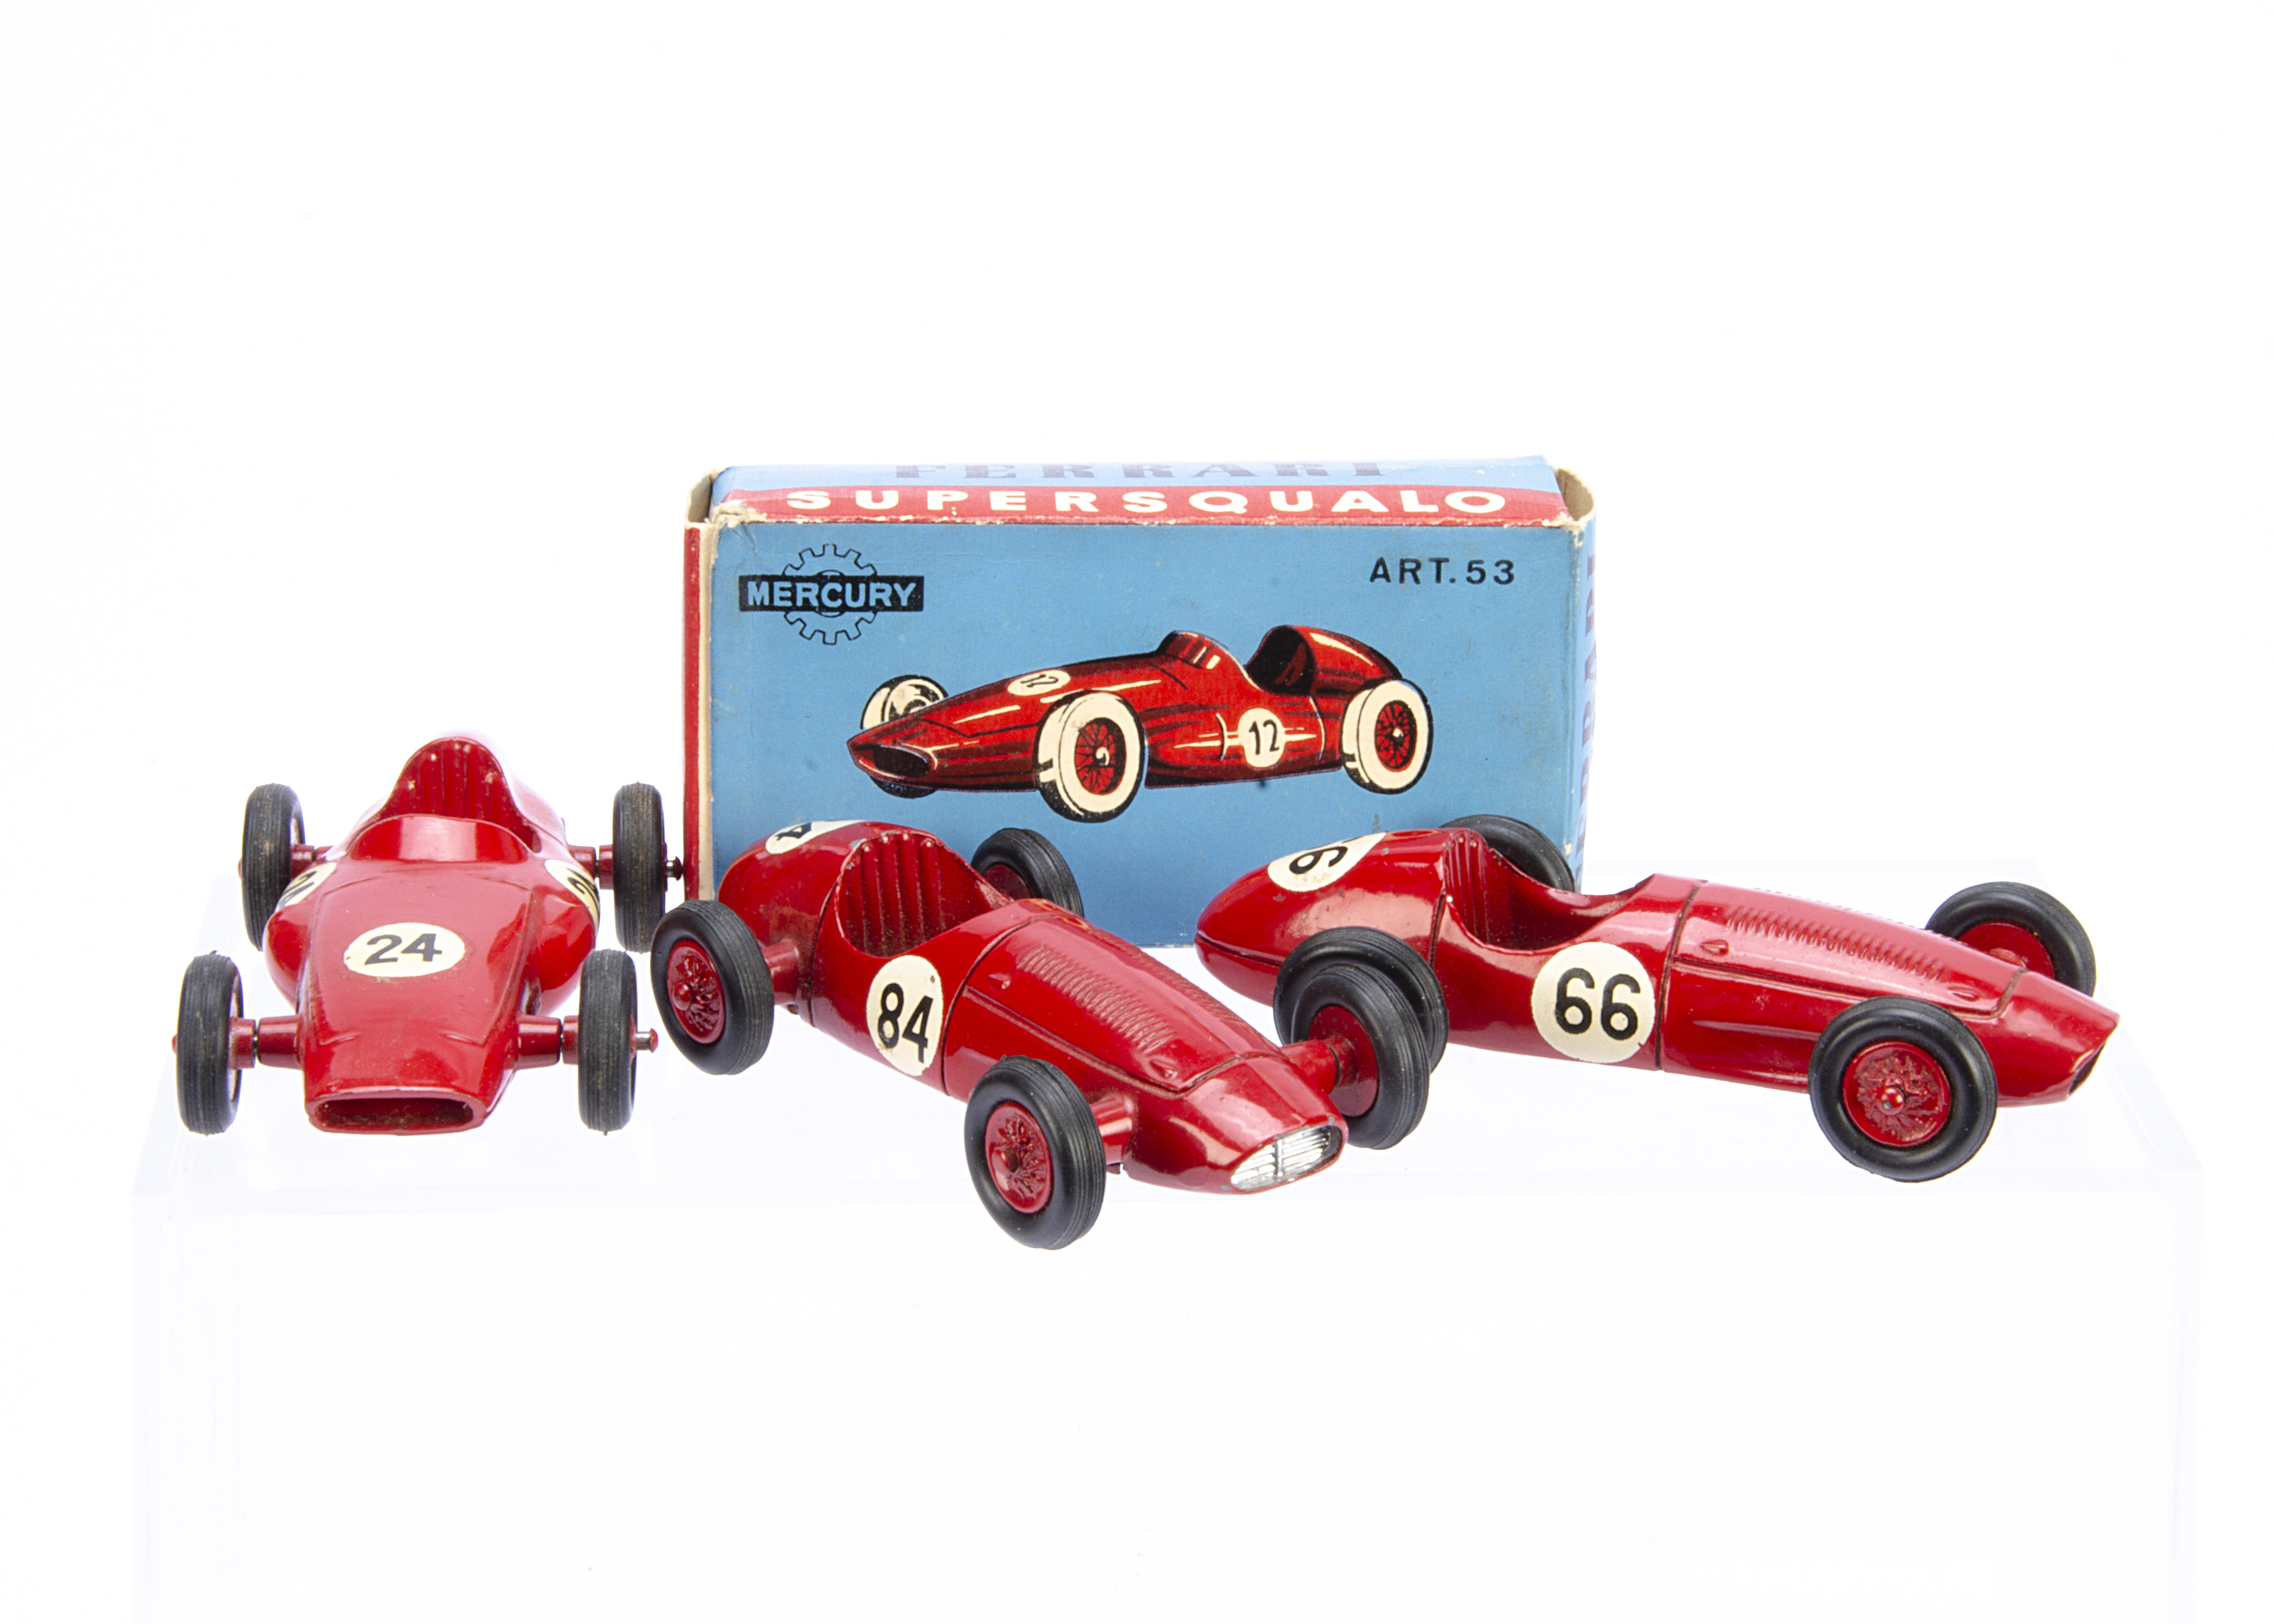 Mercury Art 53 Ferrari "Supersqualo" Racing Car, red body and hubs, RN24, in original box, loose Art